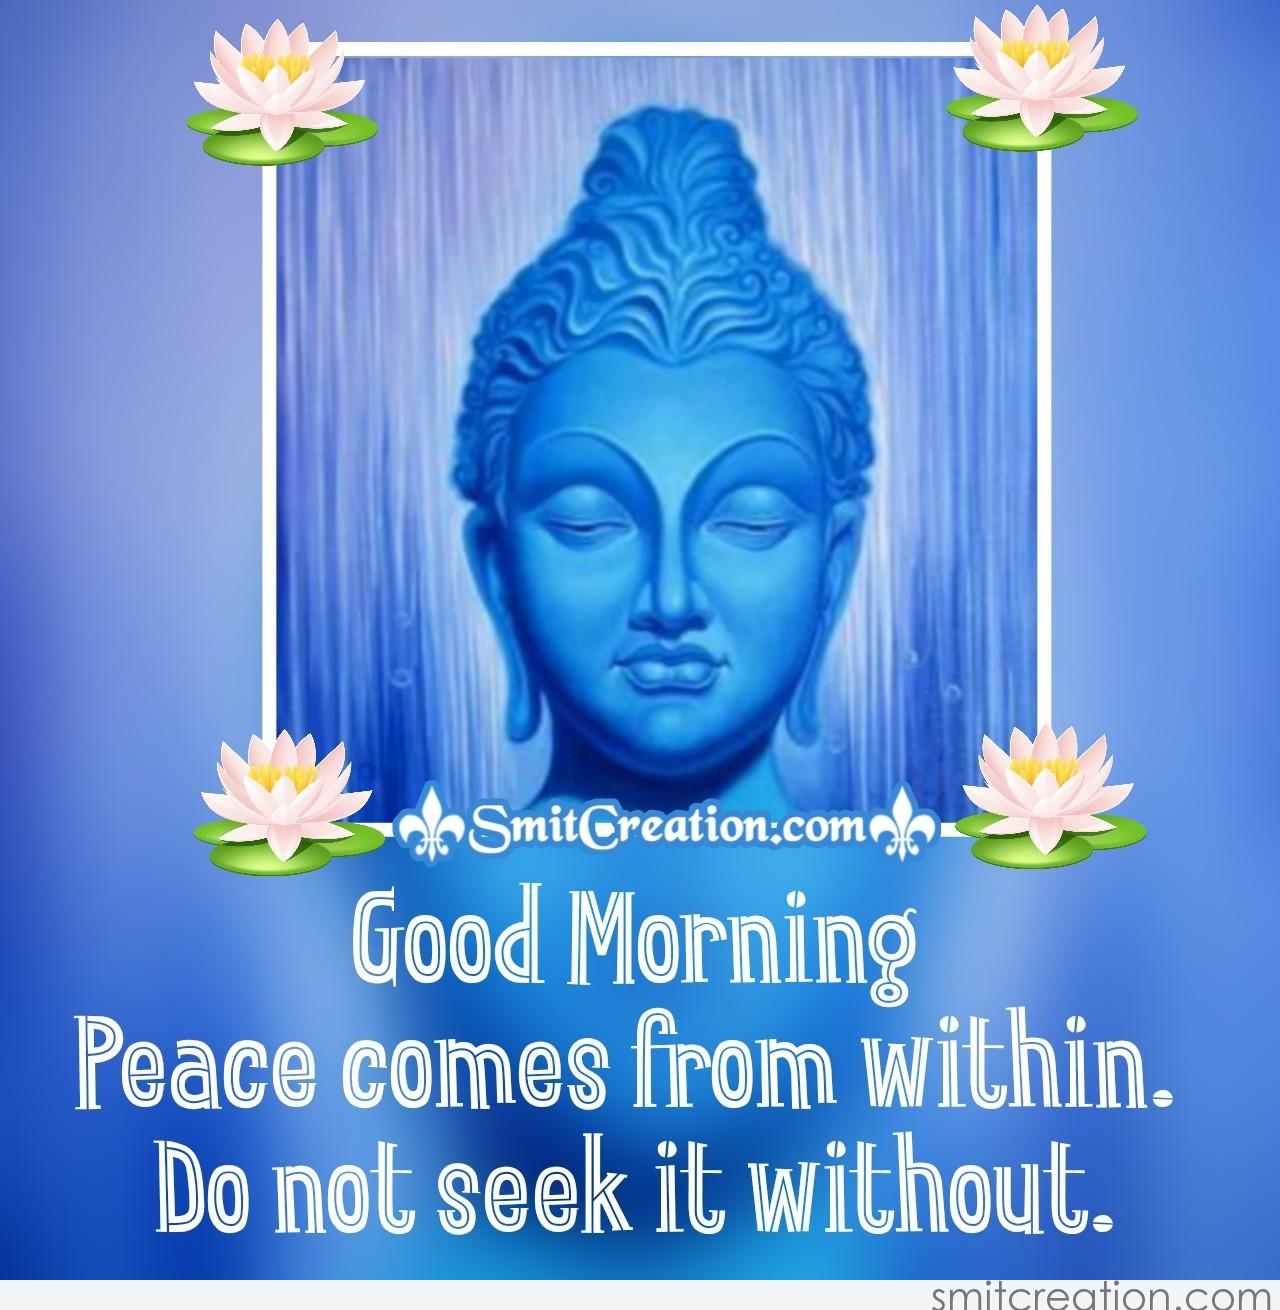 Good Morning Buddha Quote On Peace - SmitCreation.com